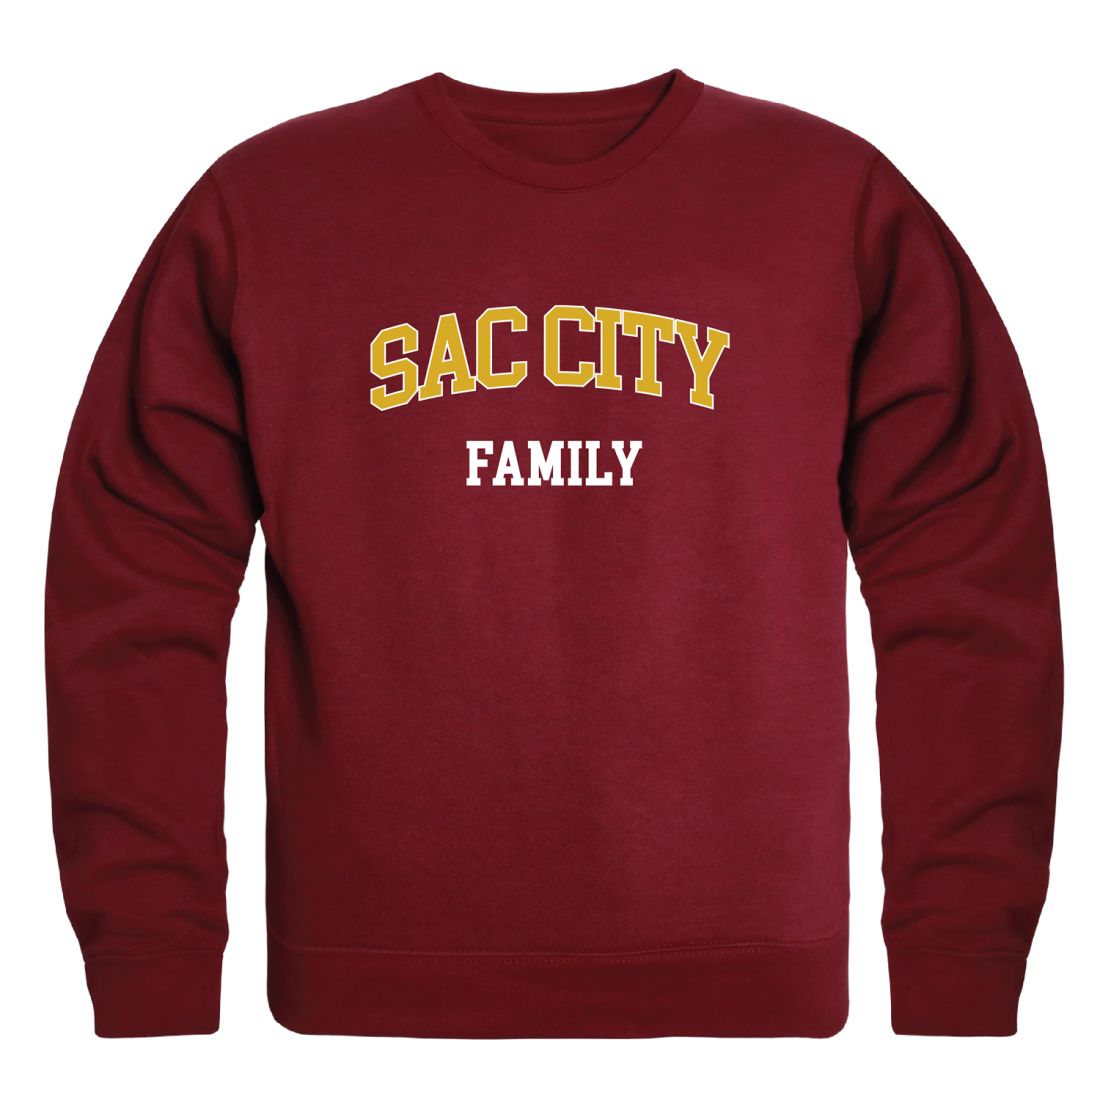 Sacramento-City-College-Panthers-Family-Fleece-Crewneck-Pullover-Sweatshirt